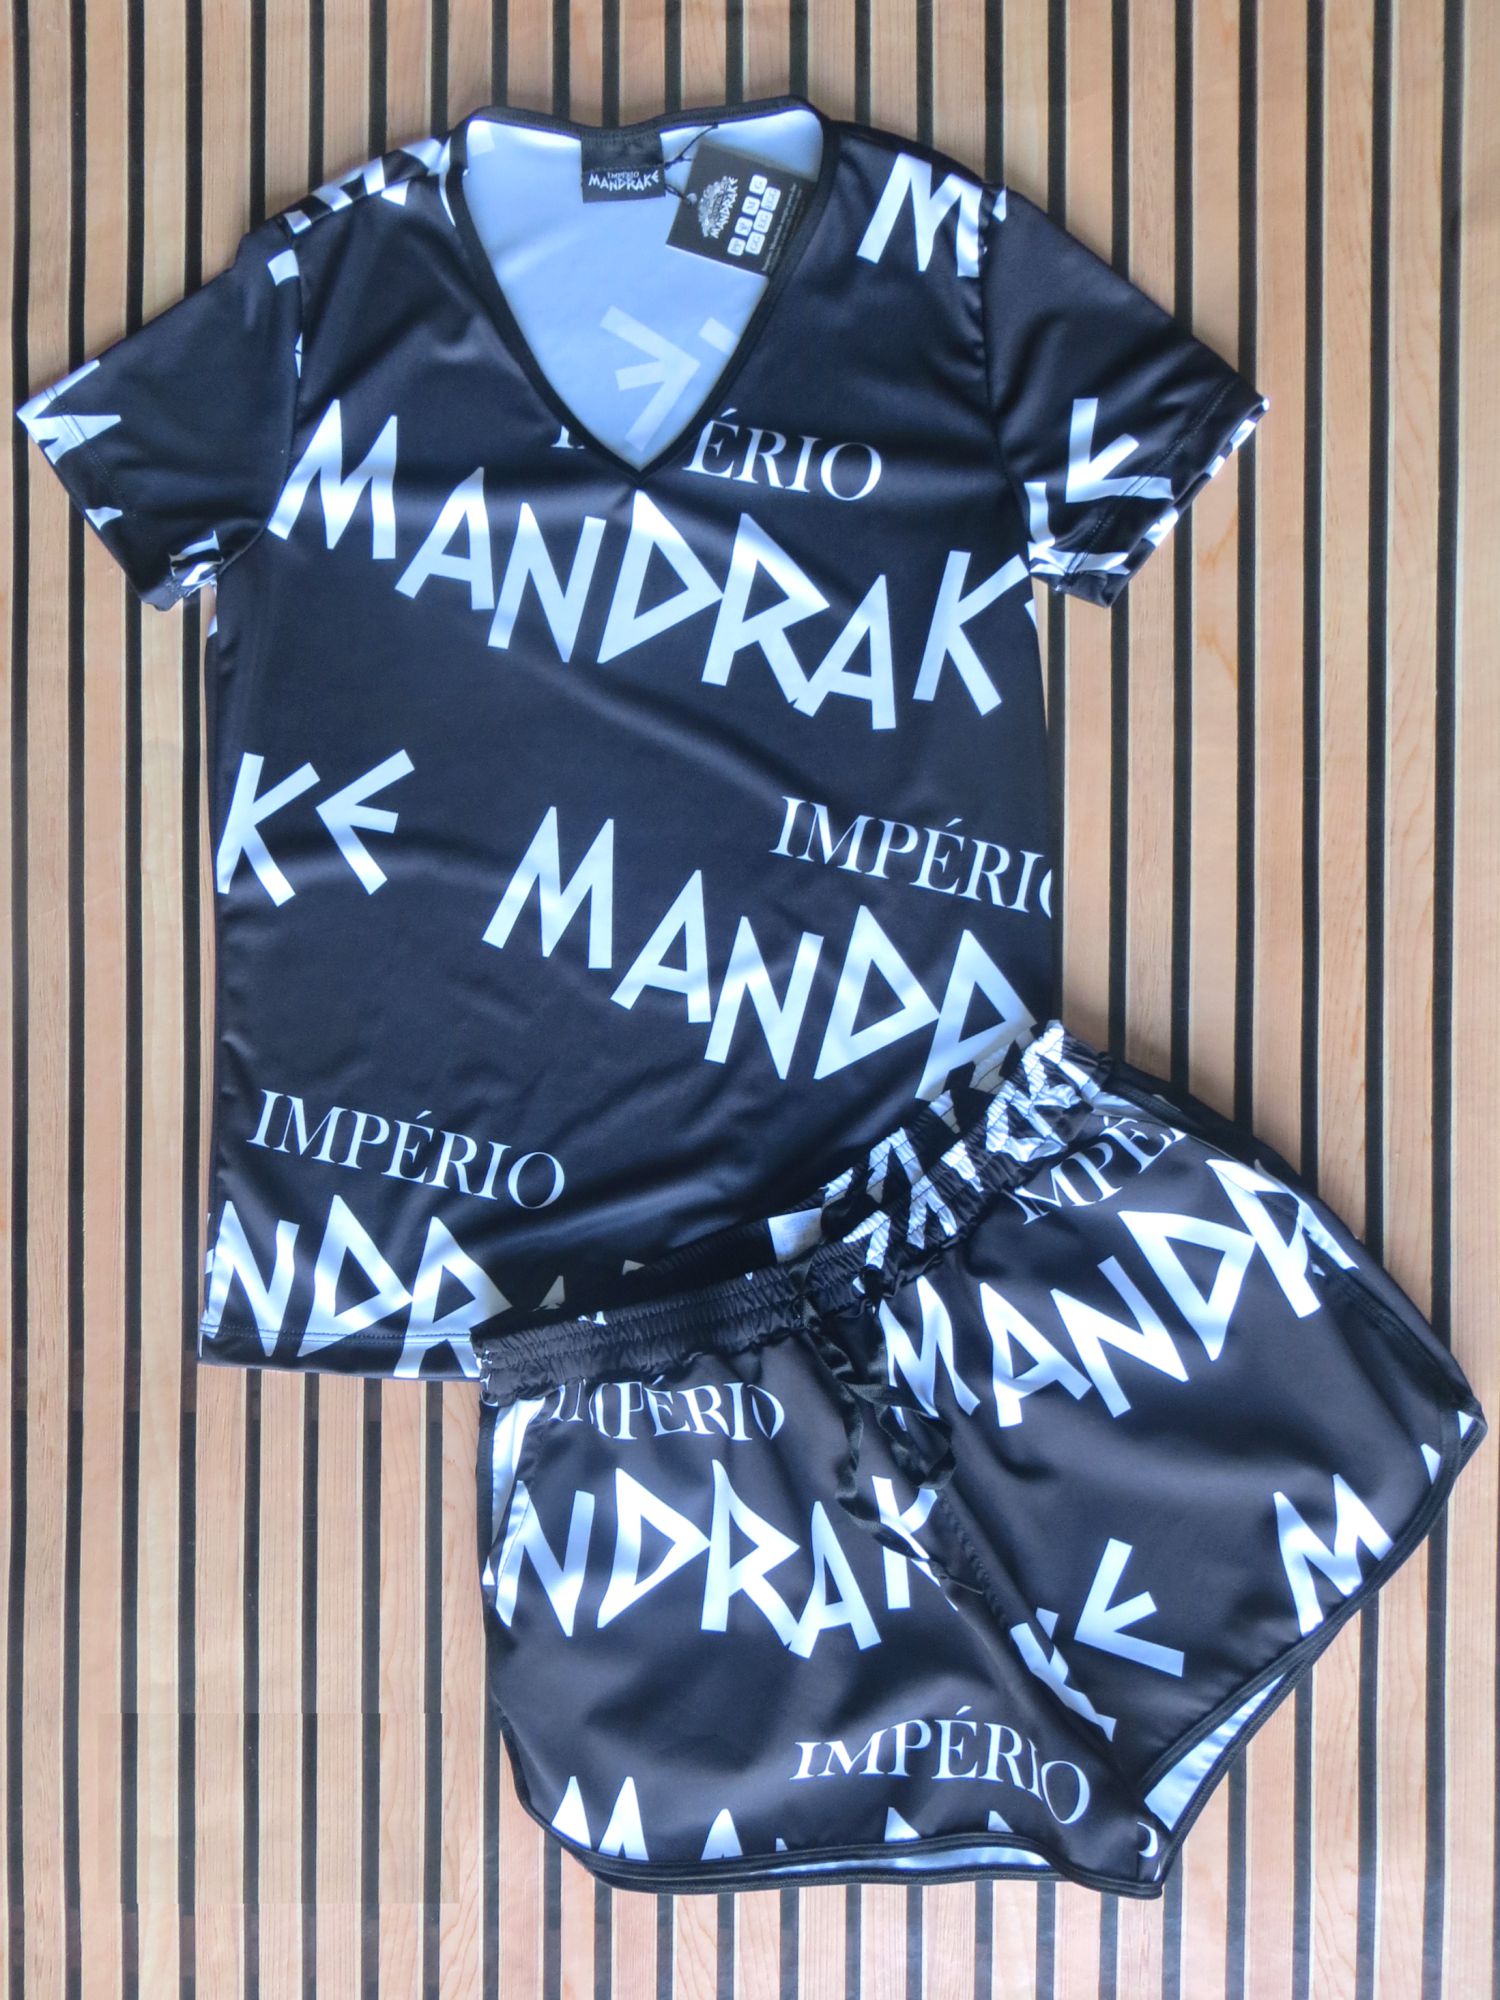 44 ideias de Mandrake oakley feminino, roupas oakley, roupas tumblr, roupas  de mandrake feminina 